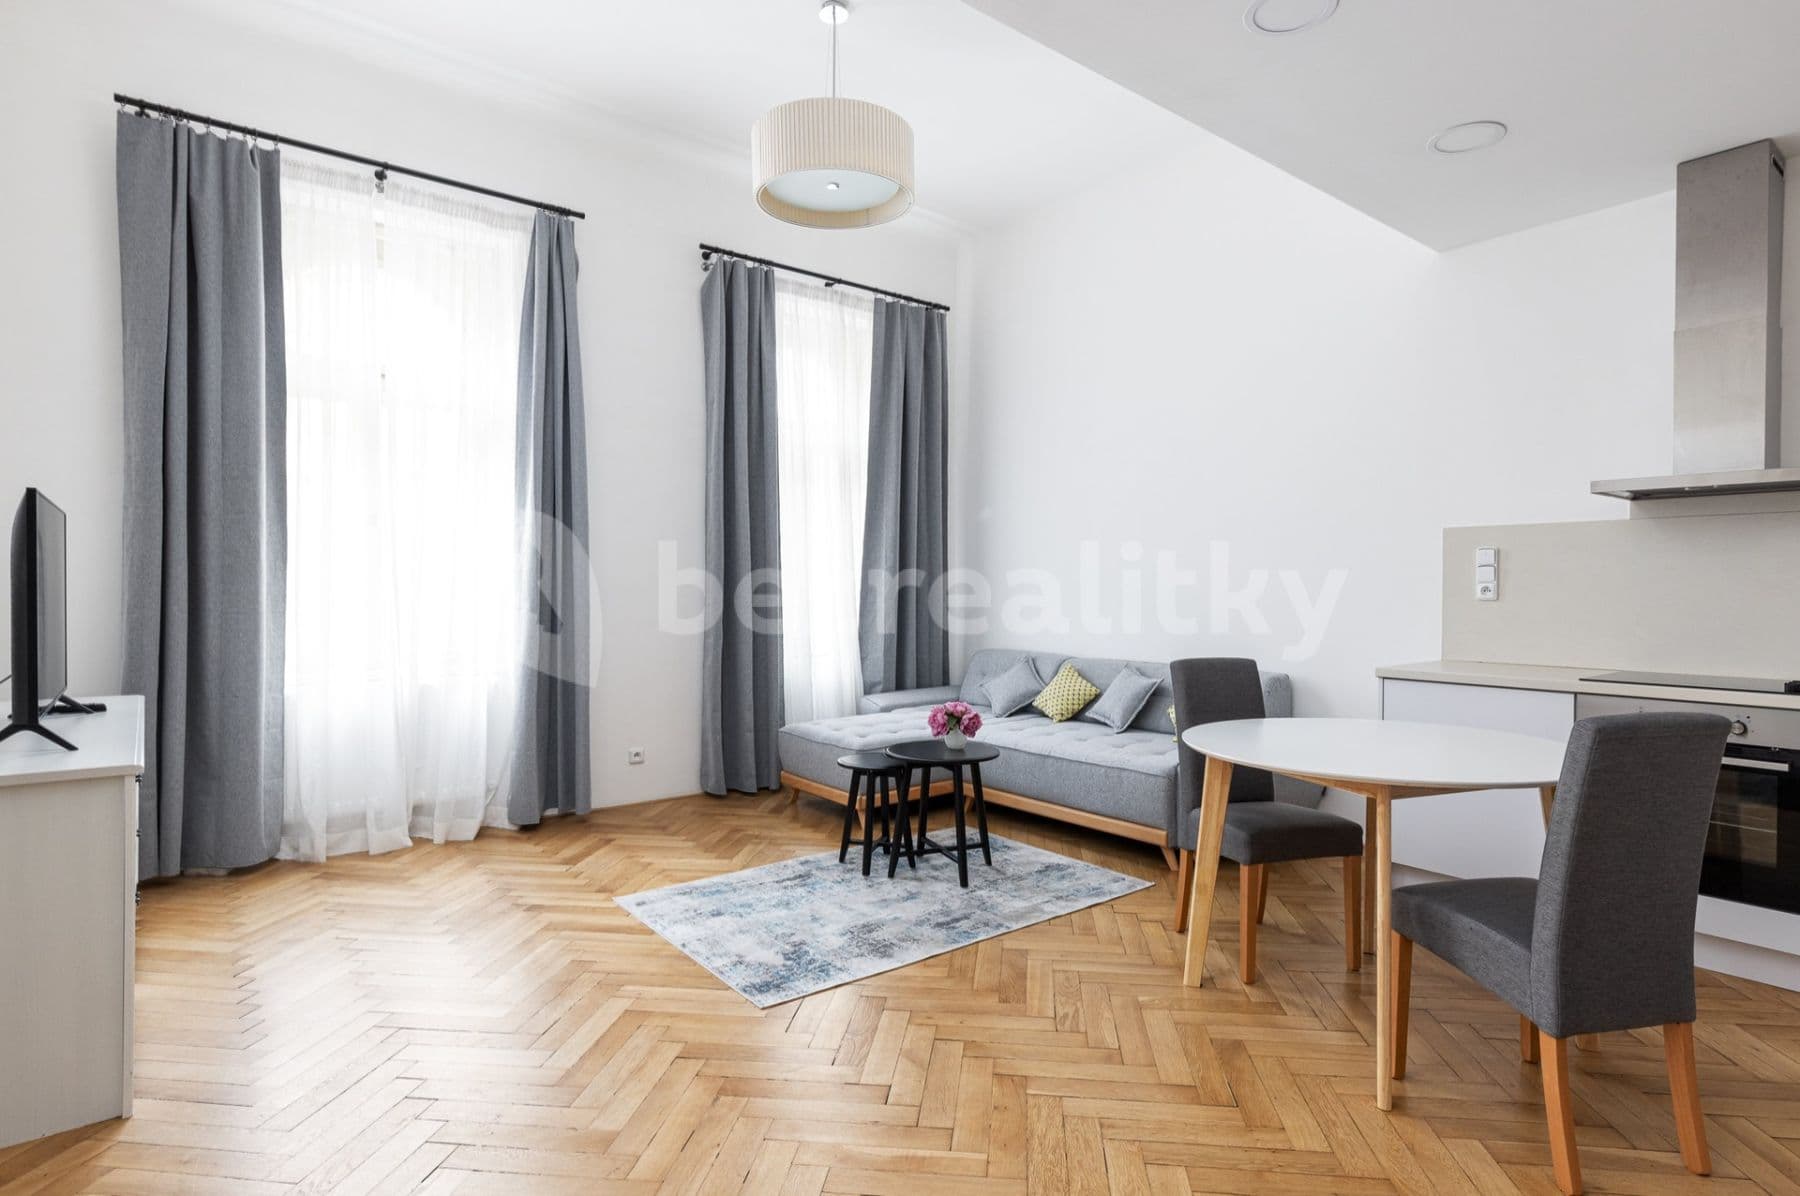 3 bedroom with open-plan kitchen flat for sale, 113 m², Legerova, Prague, Prague